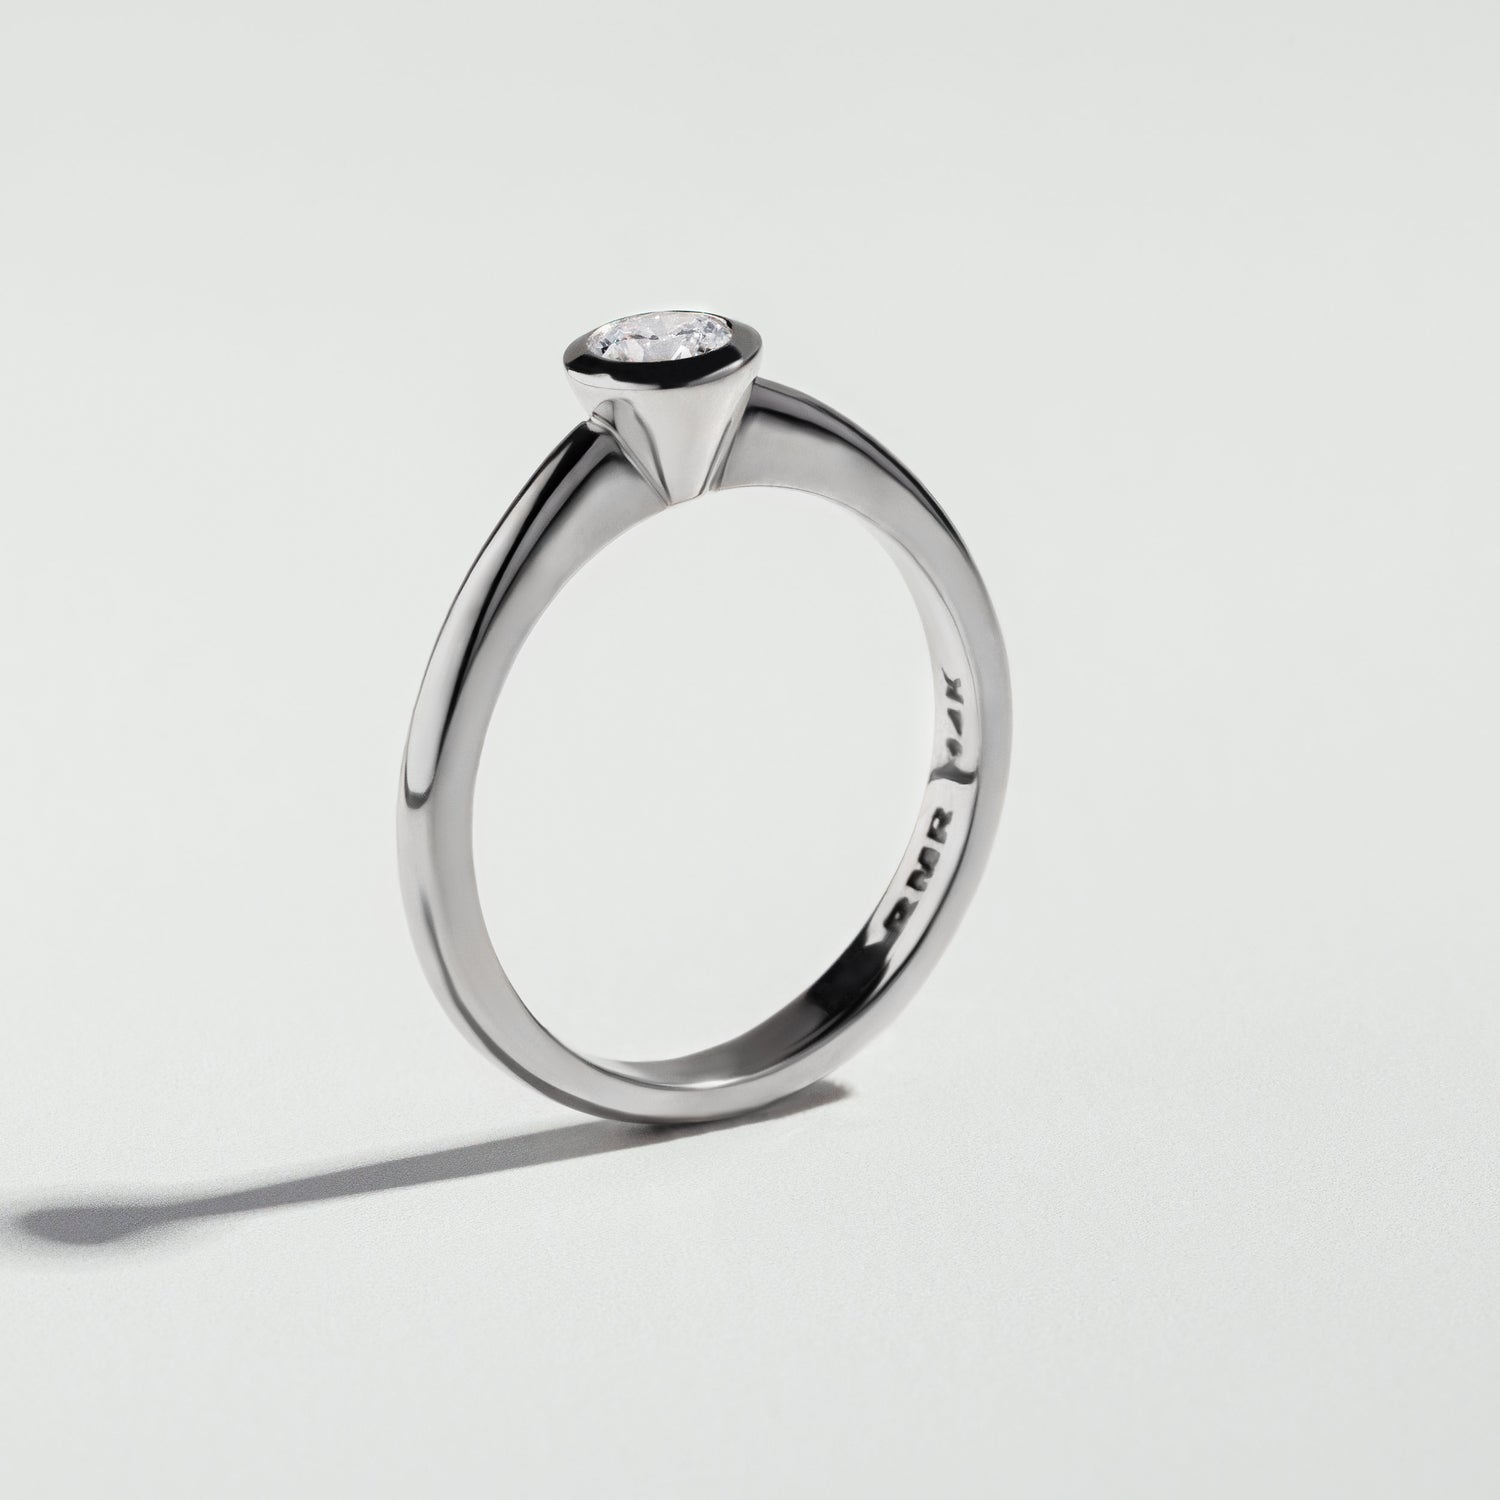 The Round Cut Bezel Diamond Ring